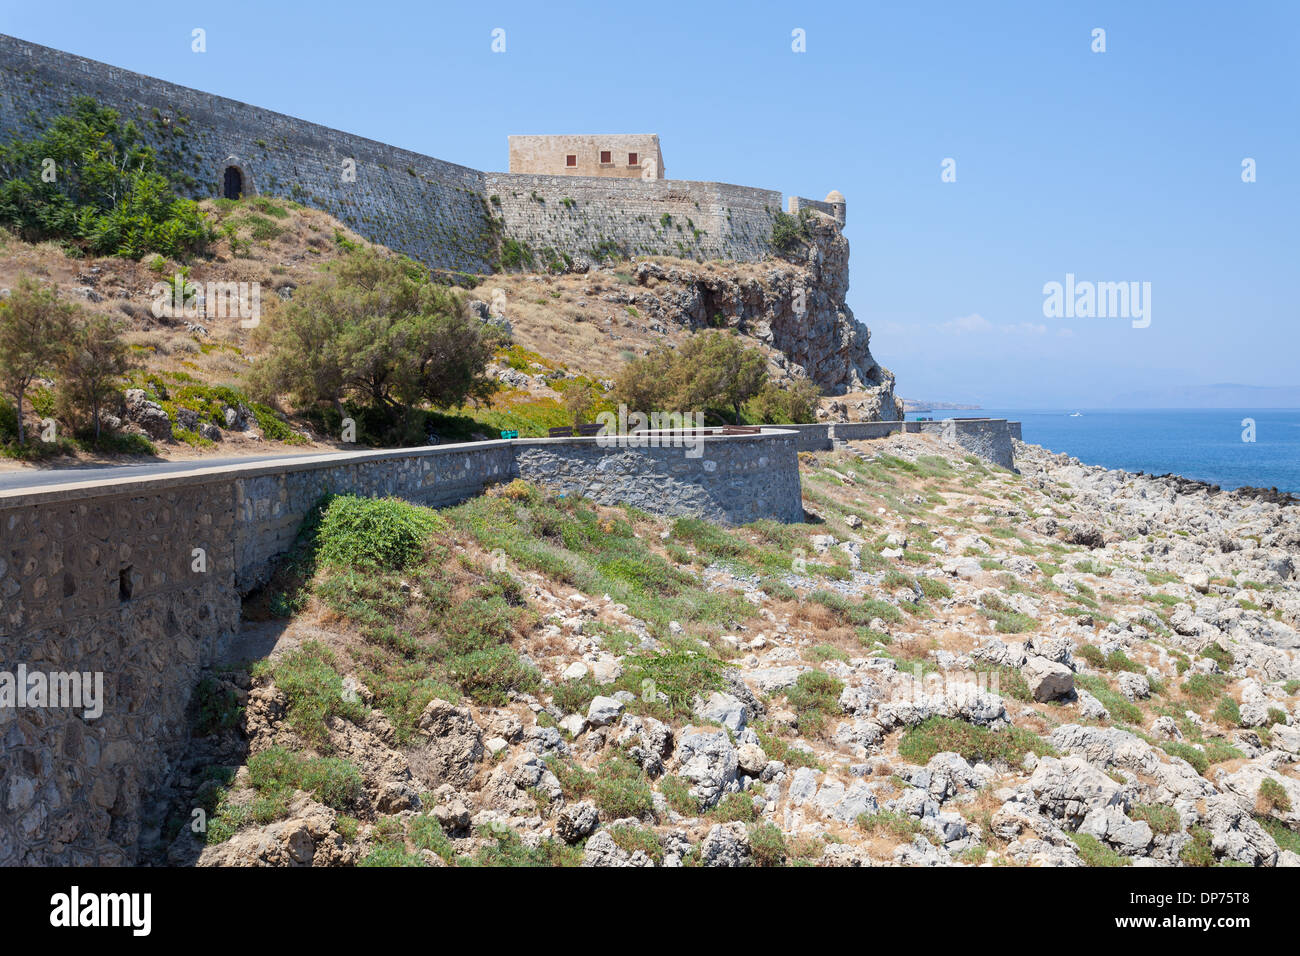 Venetian fortress in Rethymno, Crete Island, Greece Stock Photo